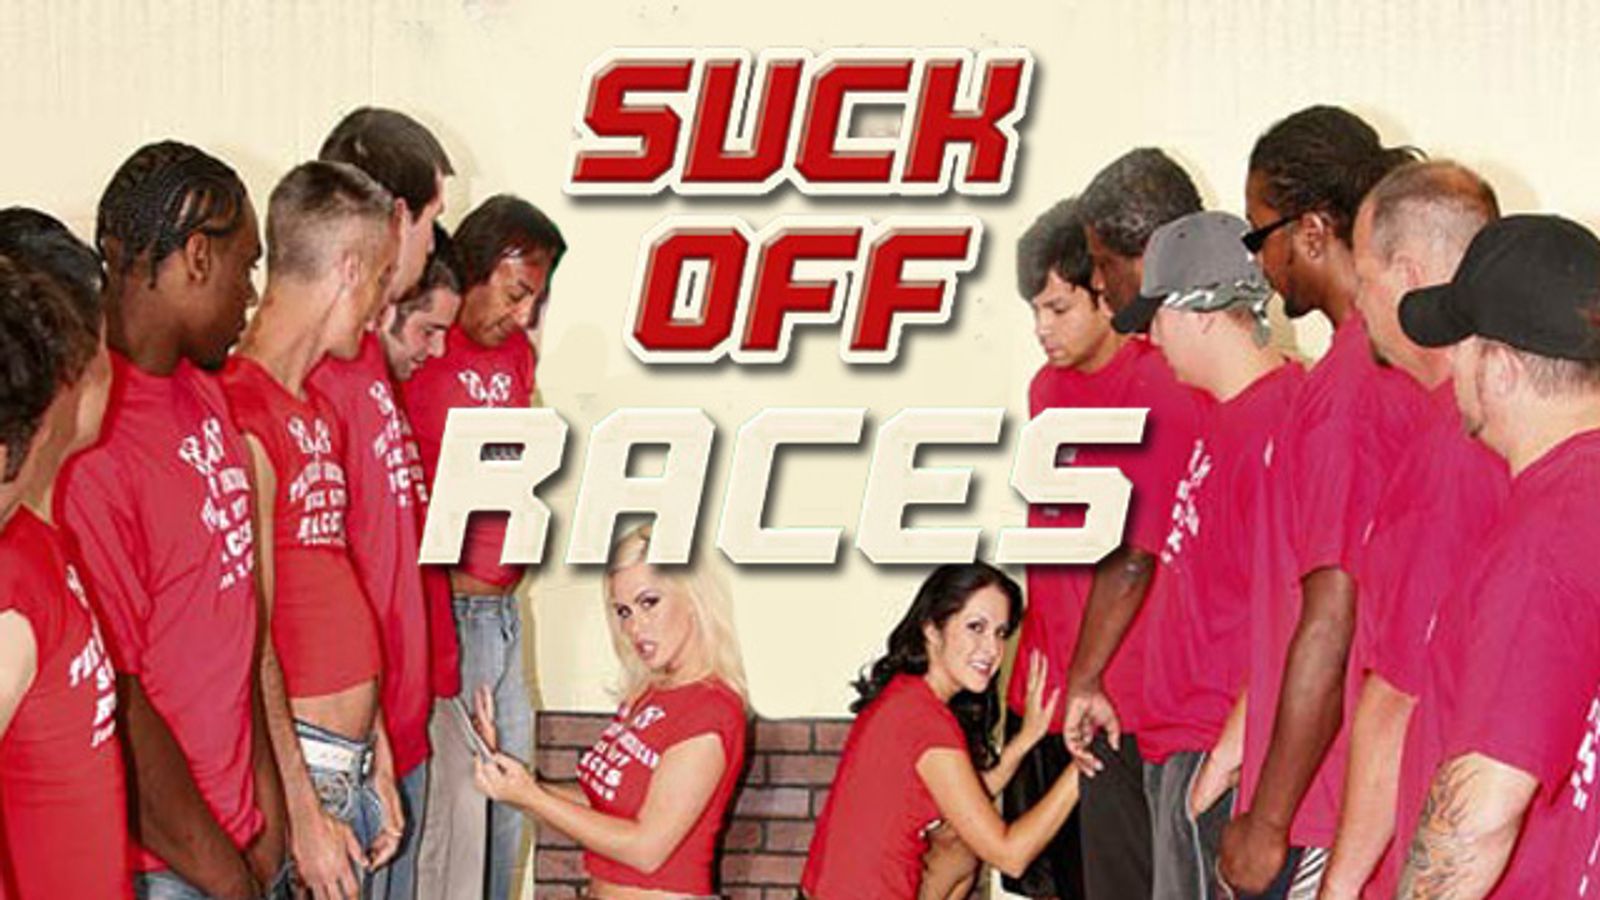 Chelsie Rae vs. Tara Lynn Foxx in JM's 'Suck Off Races'